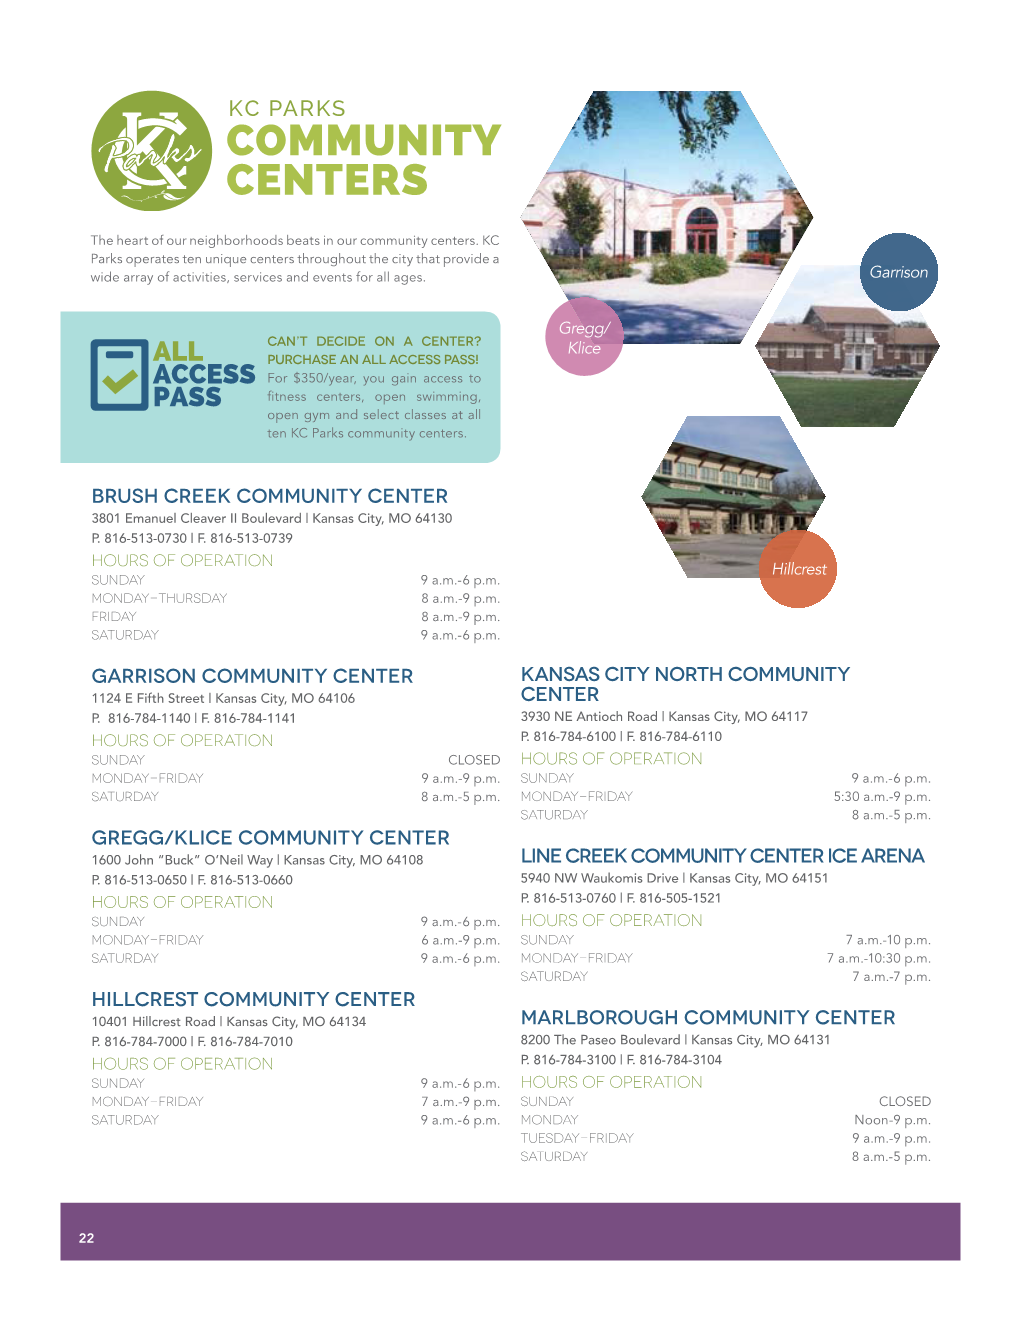 Community Centers